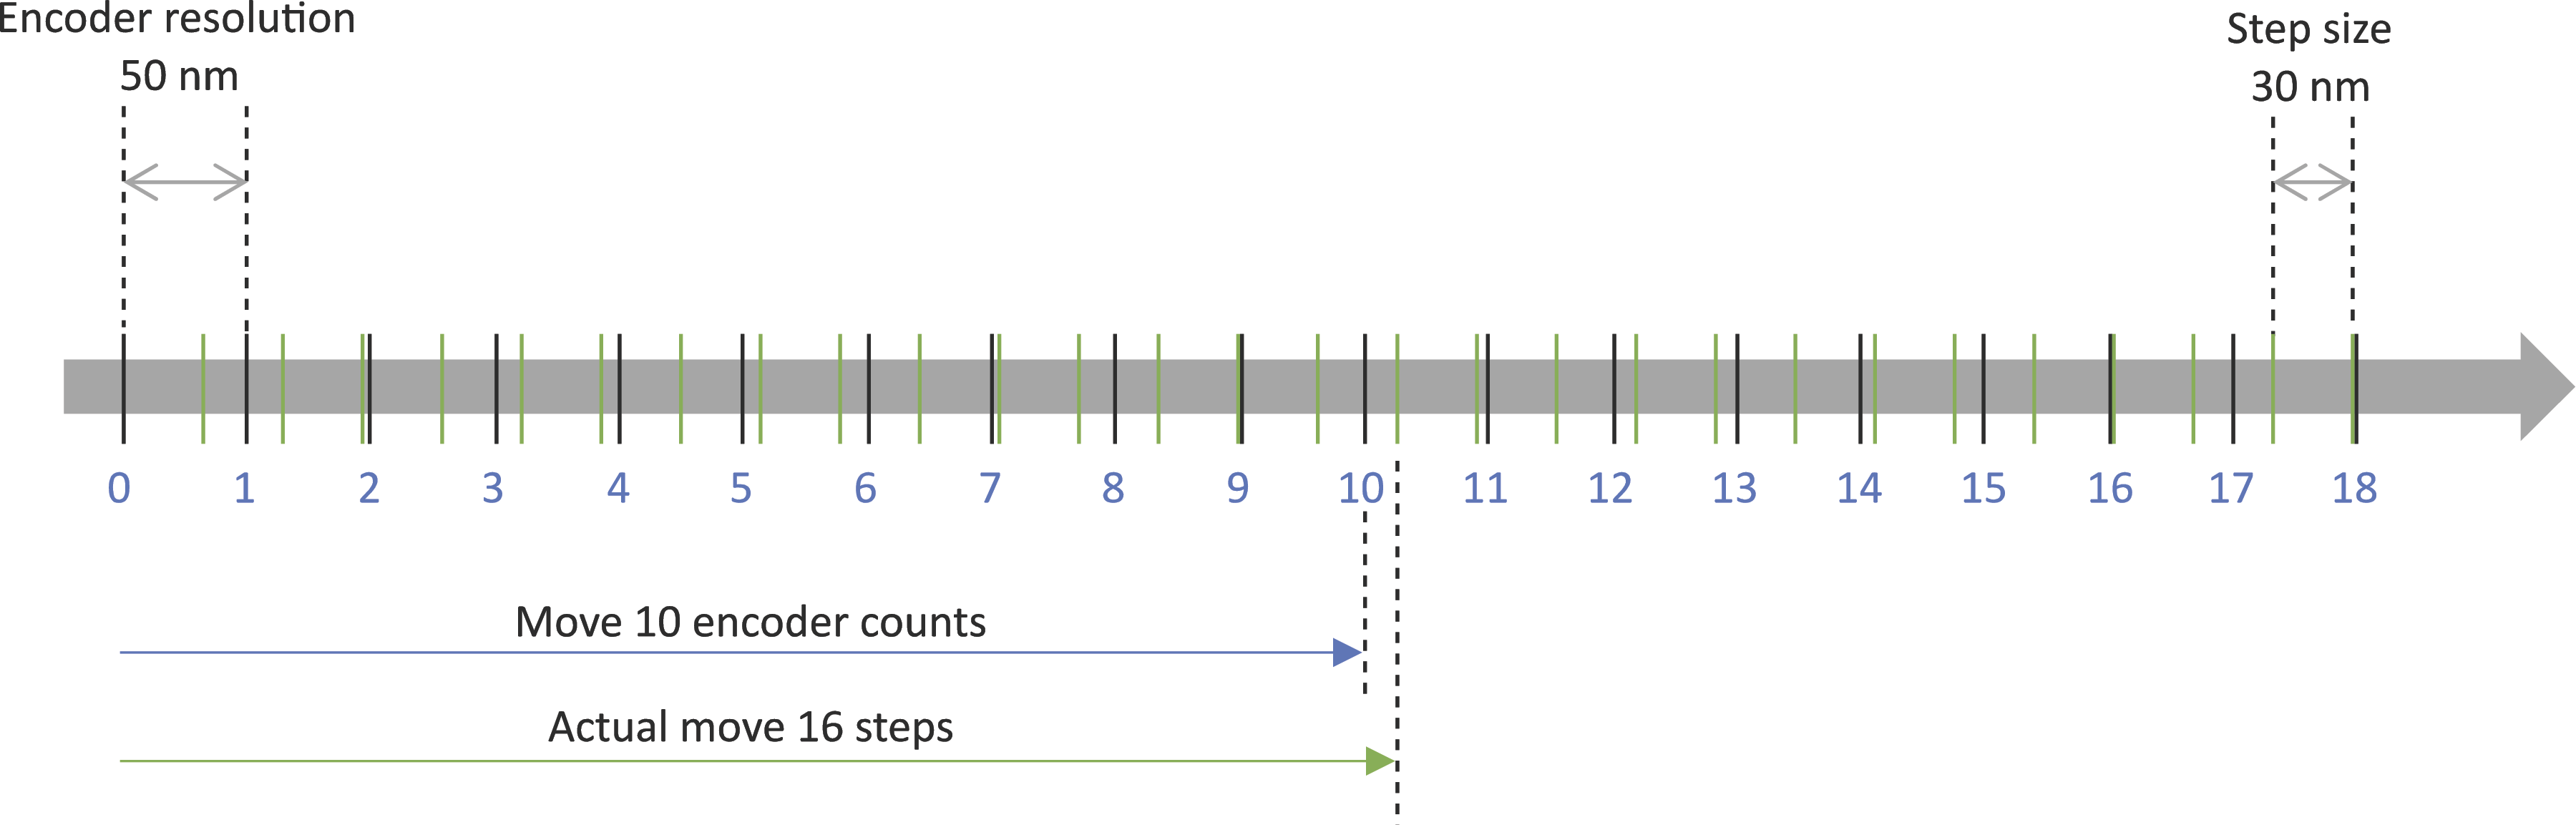 graph of Encoder resolution vs. Picomotor step size